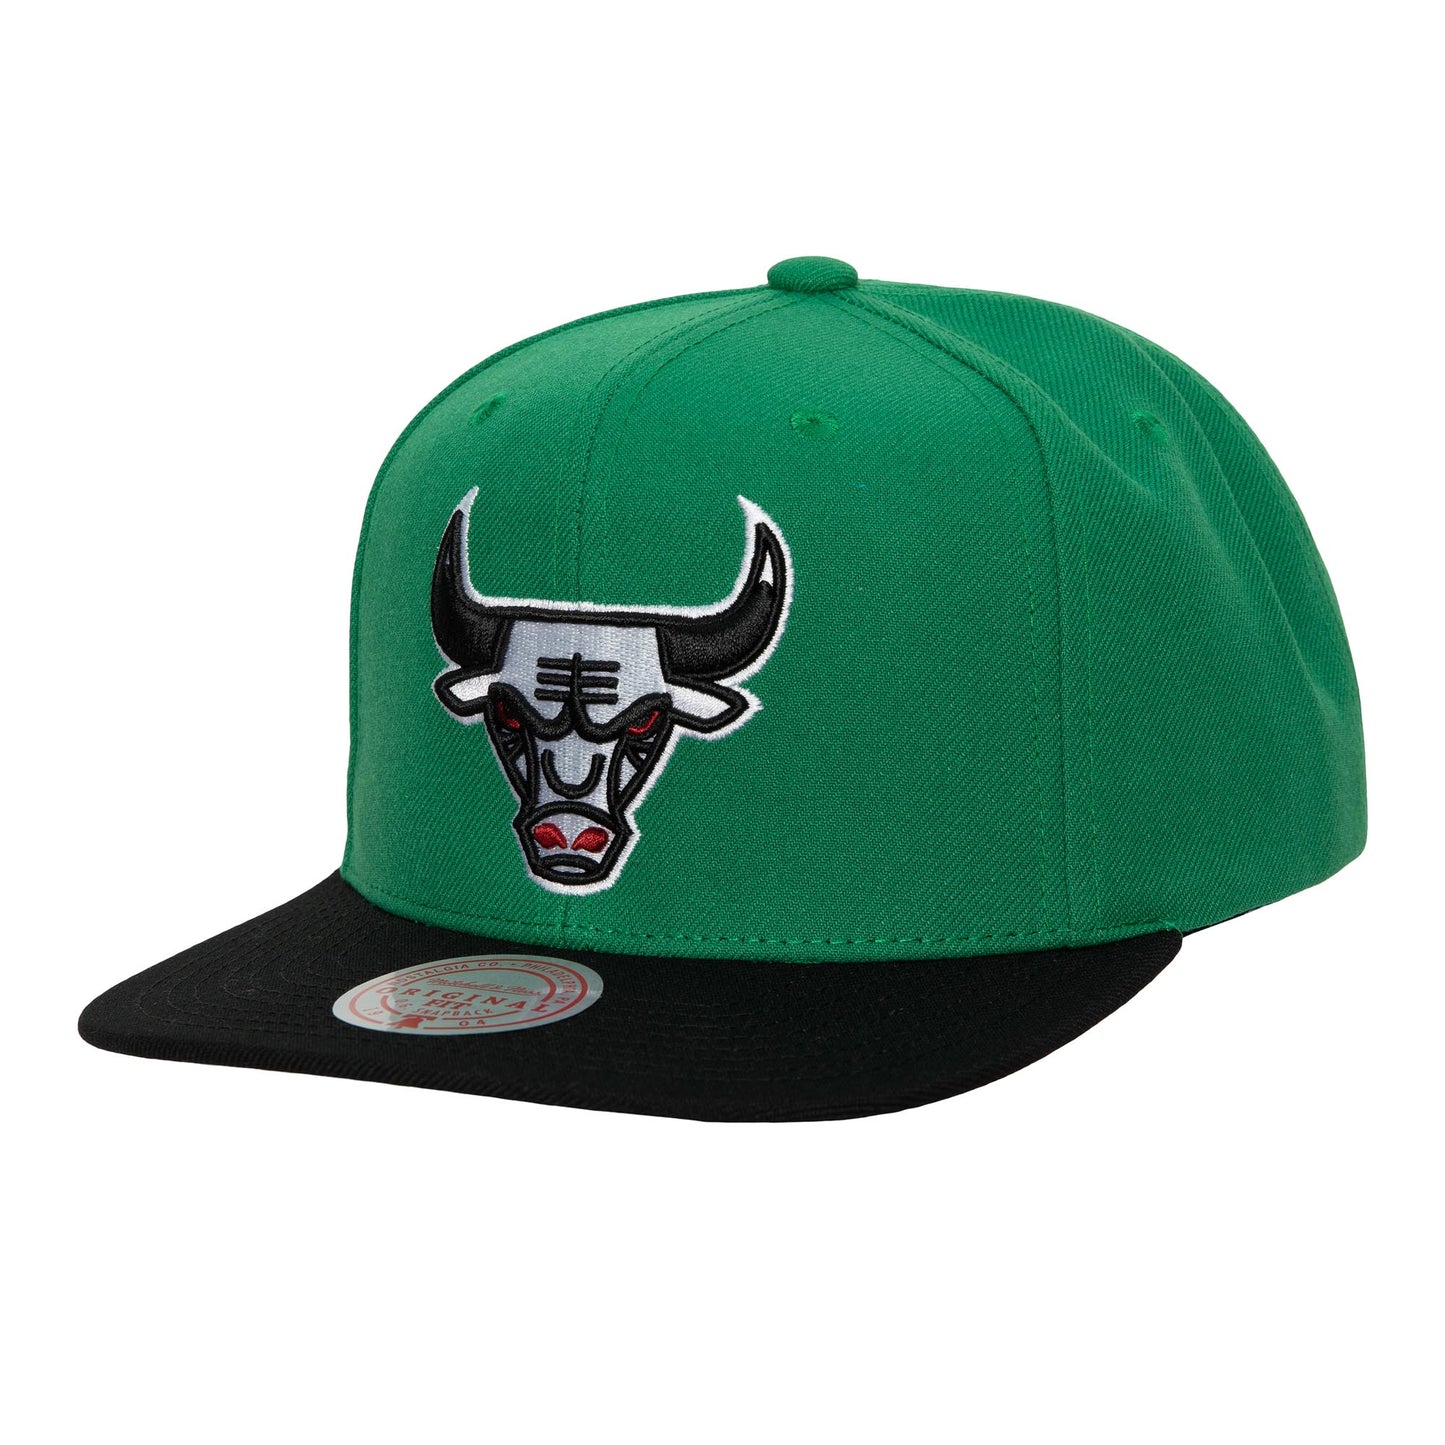 Chicago Bulls Green/Black Snapback Hat